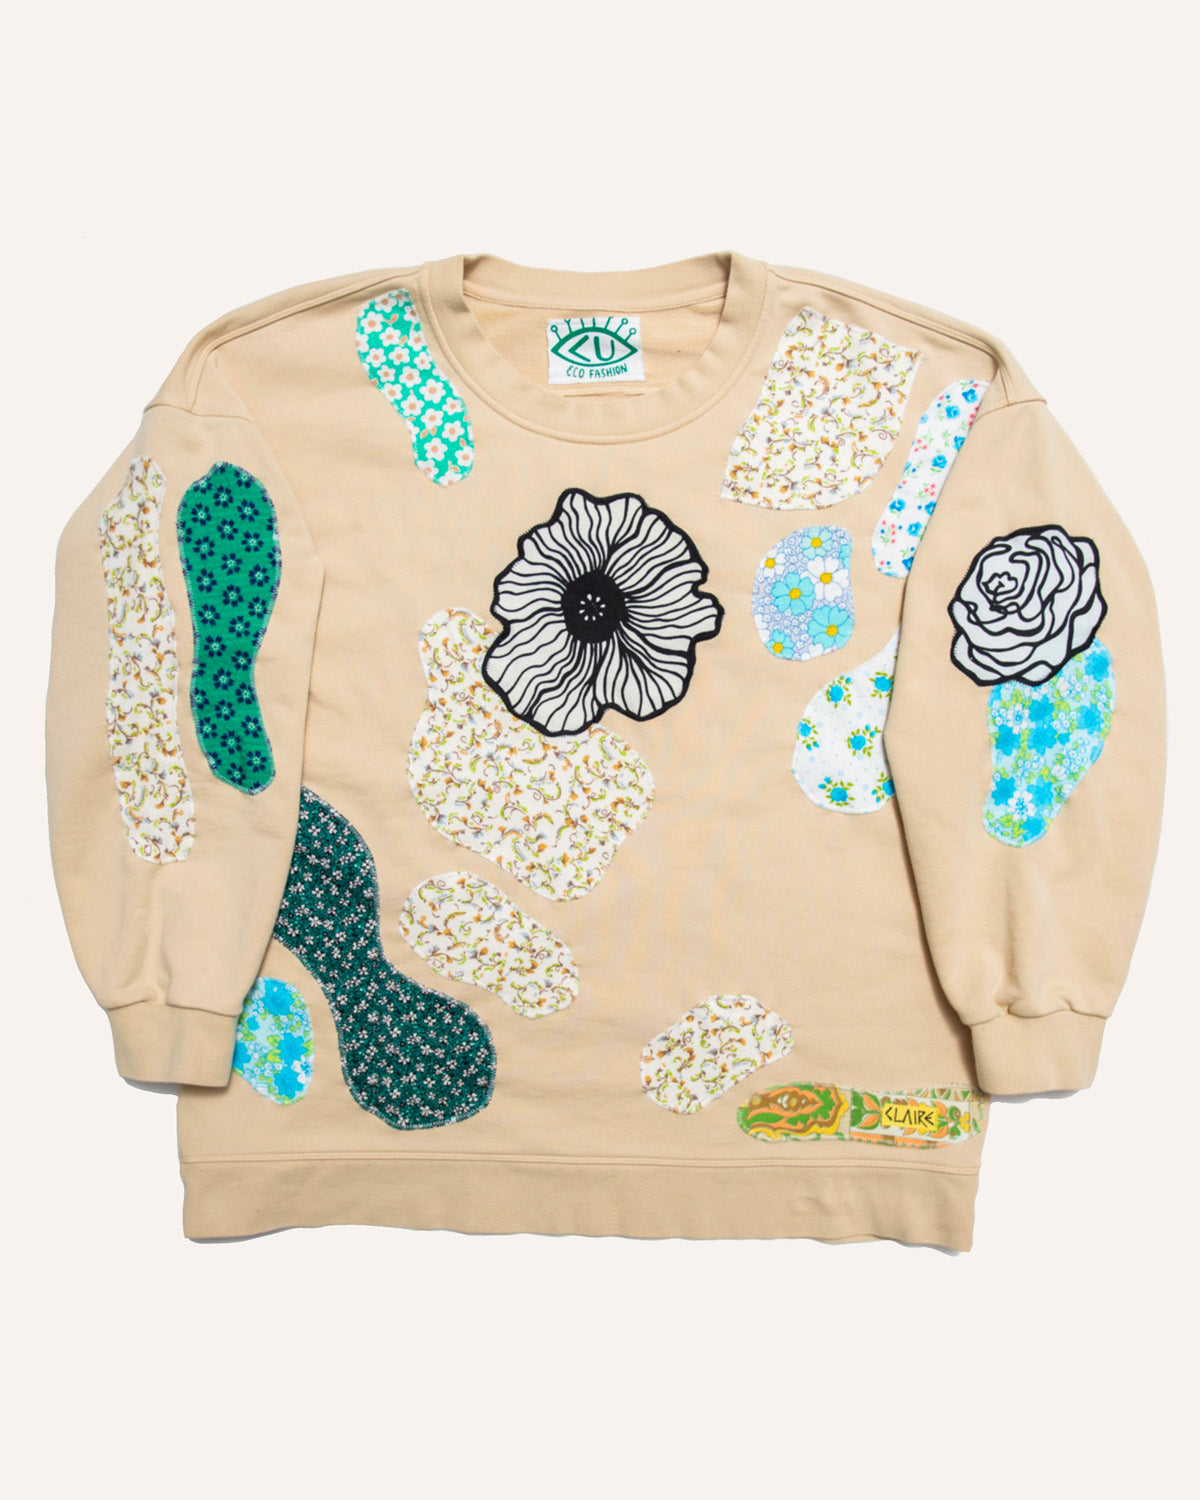 Floral Vintage Crewneck Sweater (XL)